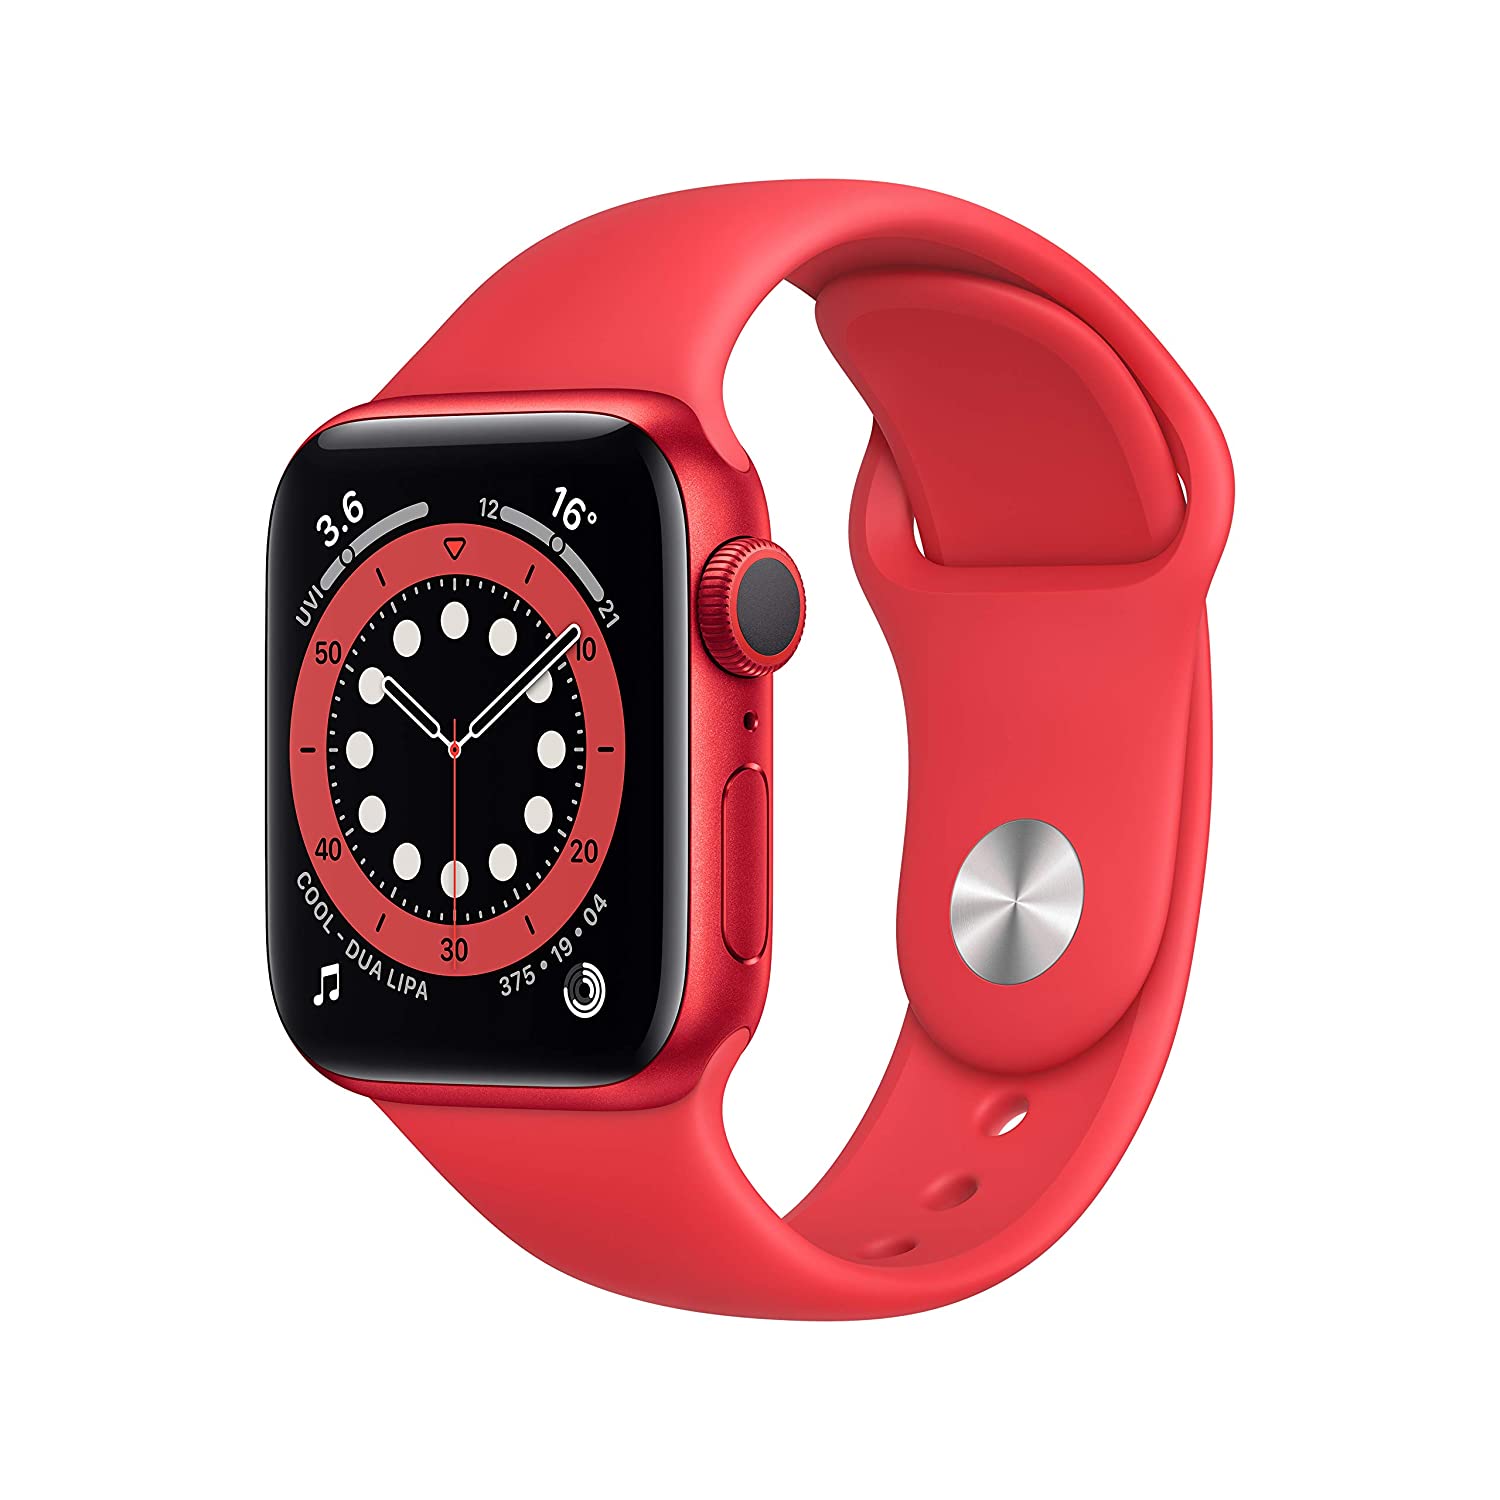 Apple Watch Series 6 Offers